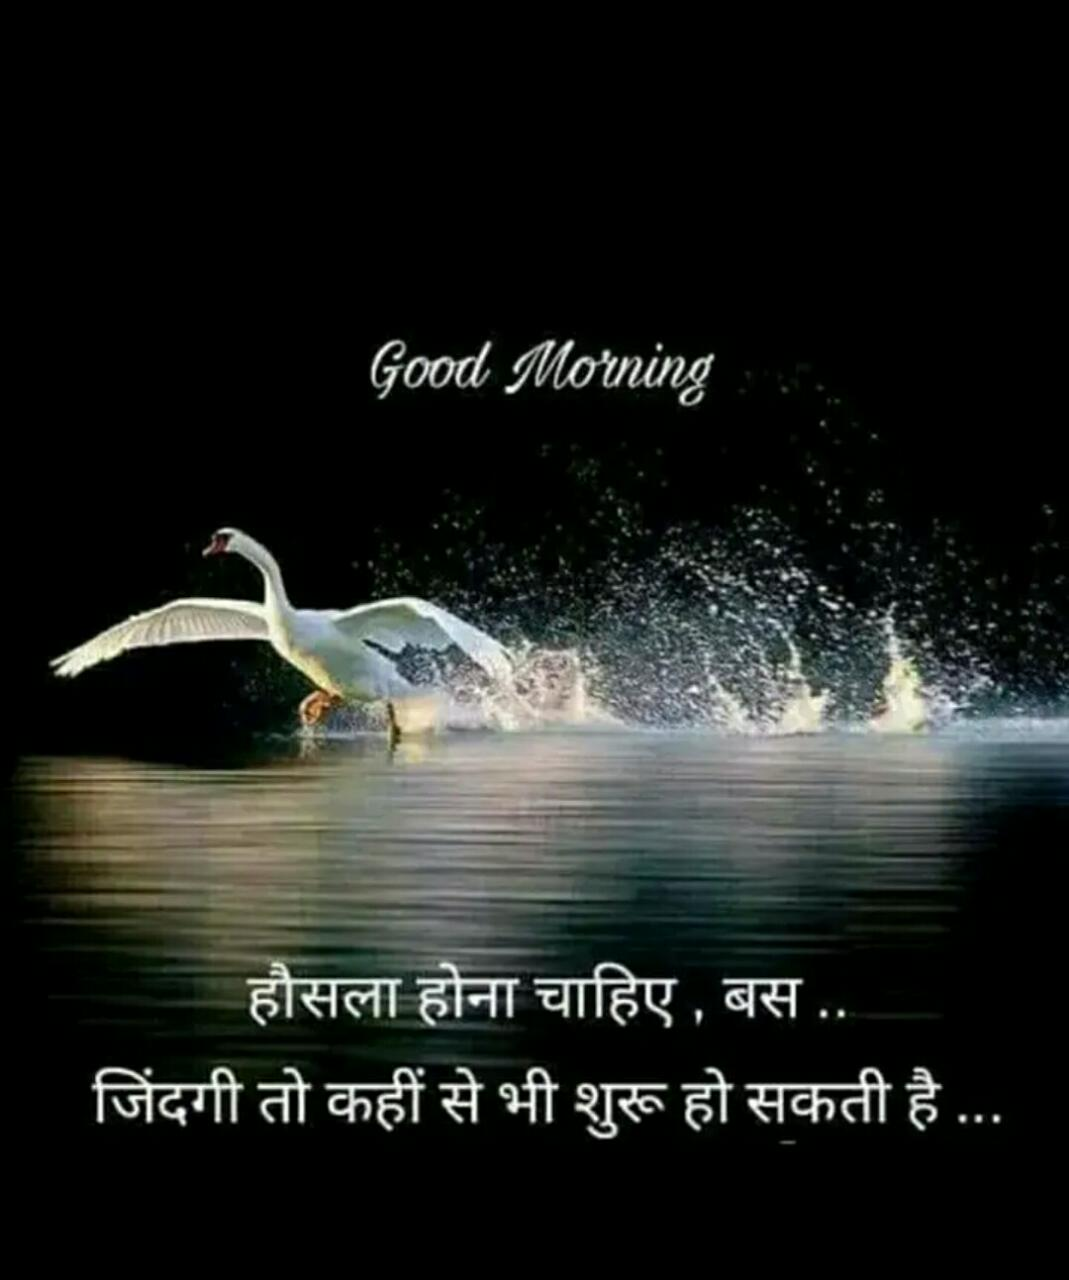 Motivational Hindi Good Morning Quote Image